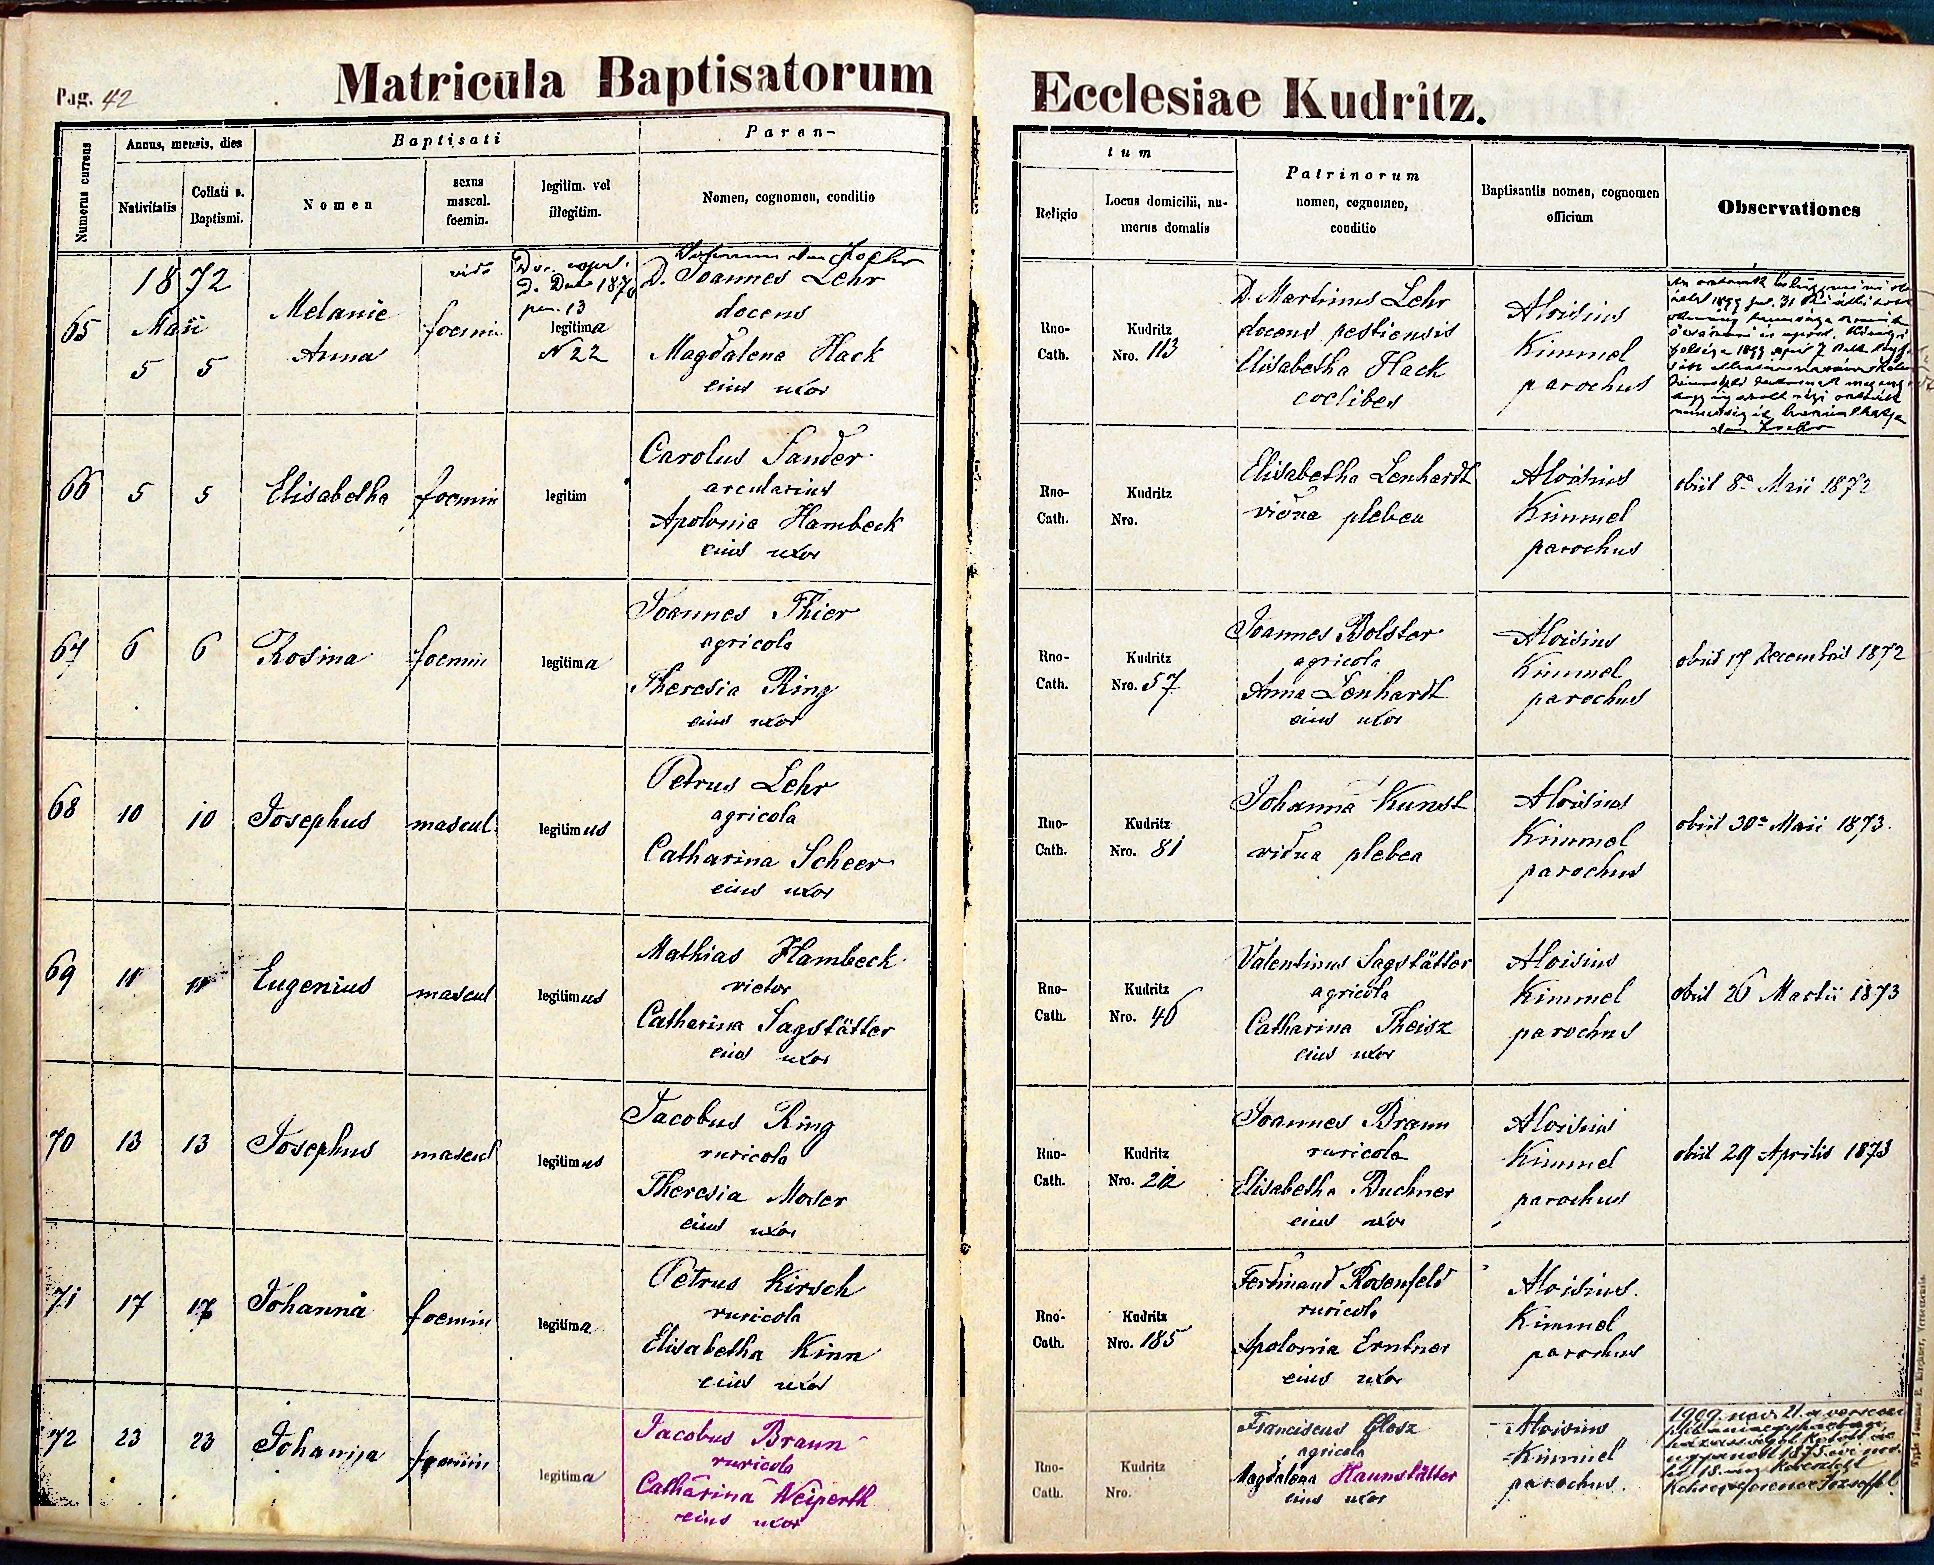 images/church_records/BIRTHS/1884-1899B/1886/042